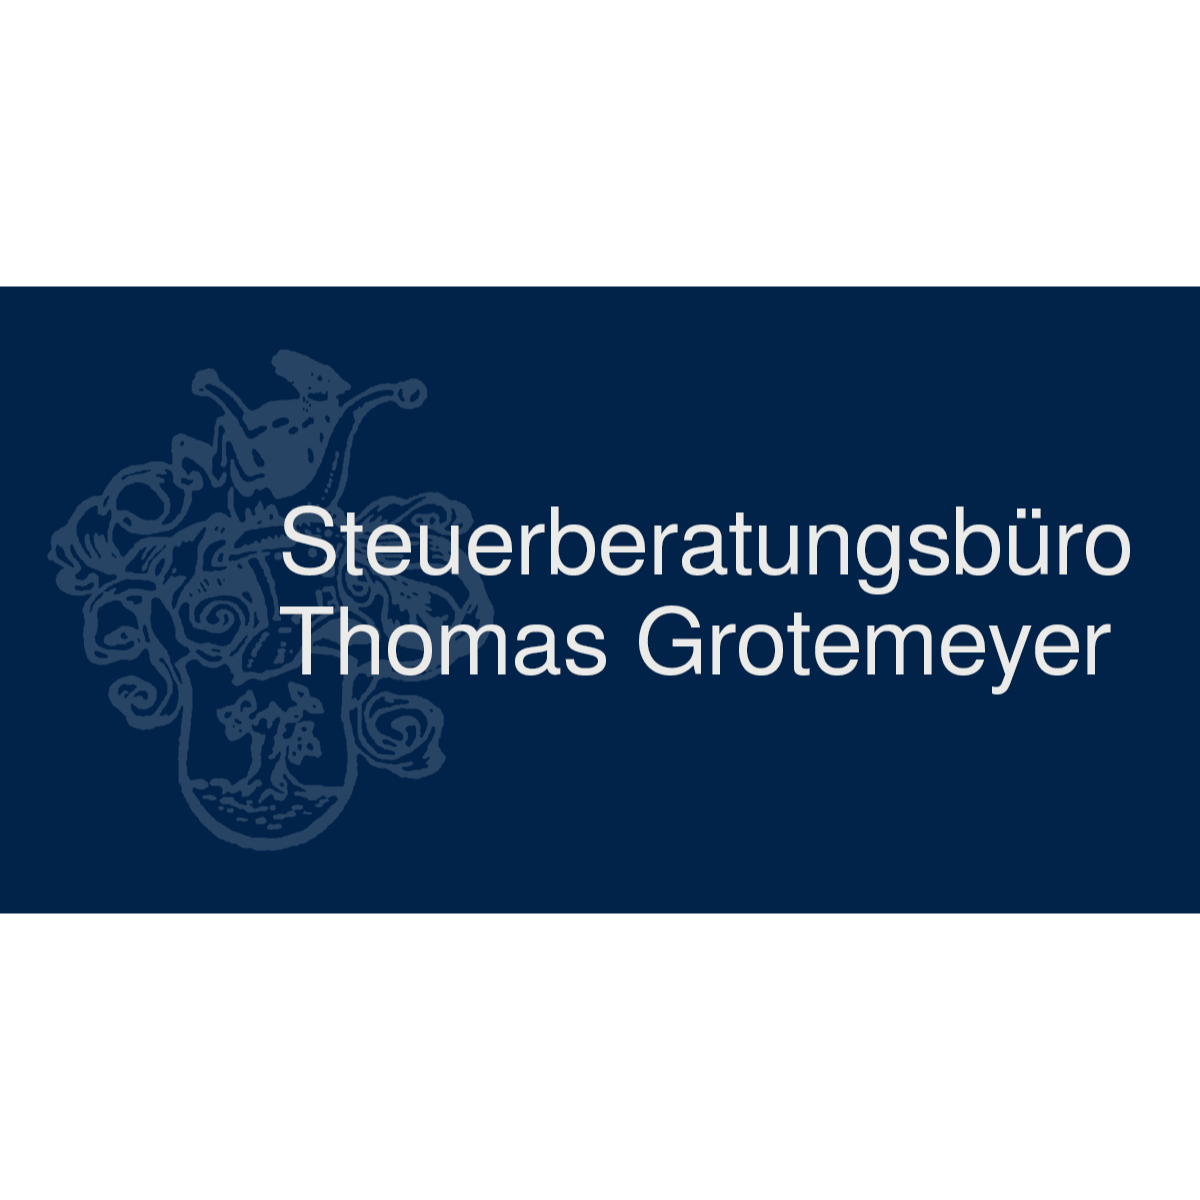 Steuerberatungsbüro Thomas Grotemeyer in Saarbrücken - Logo